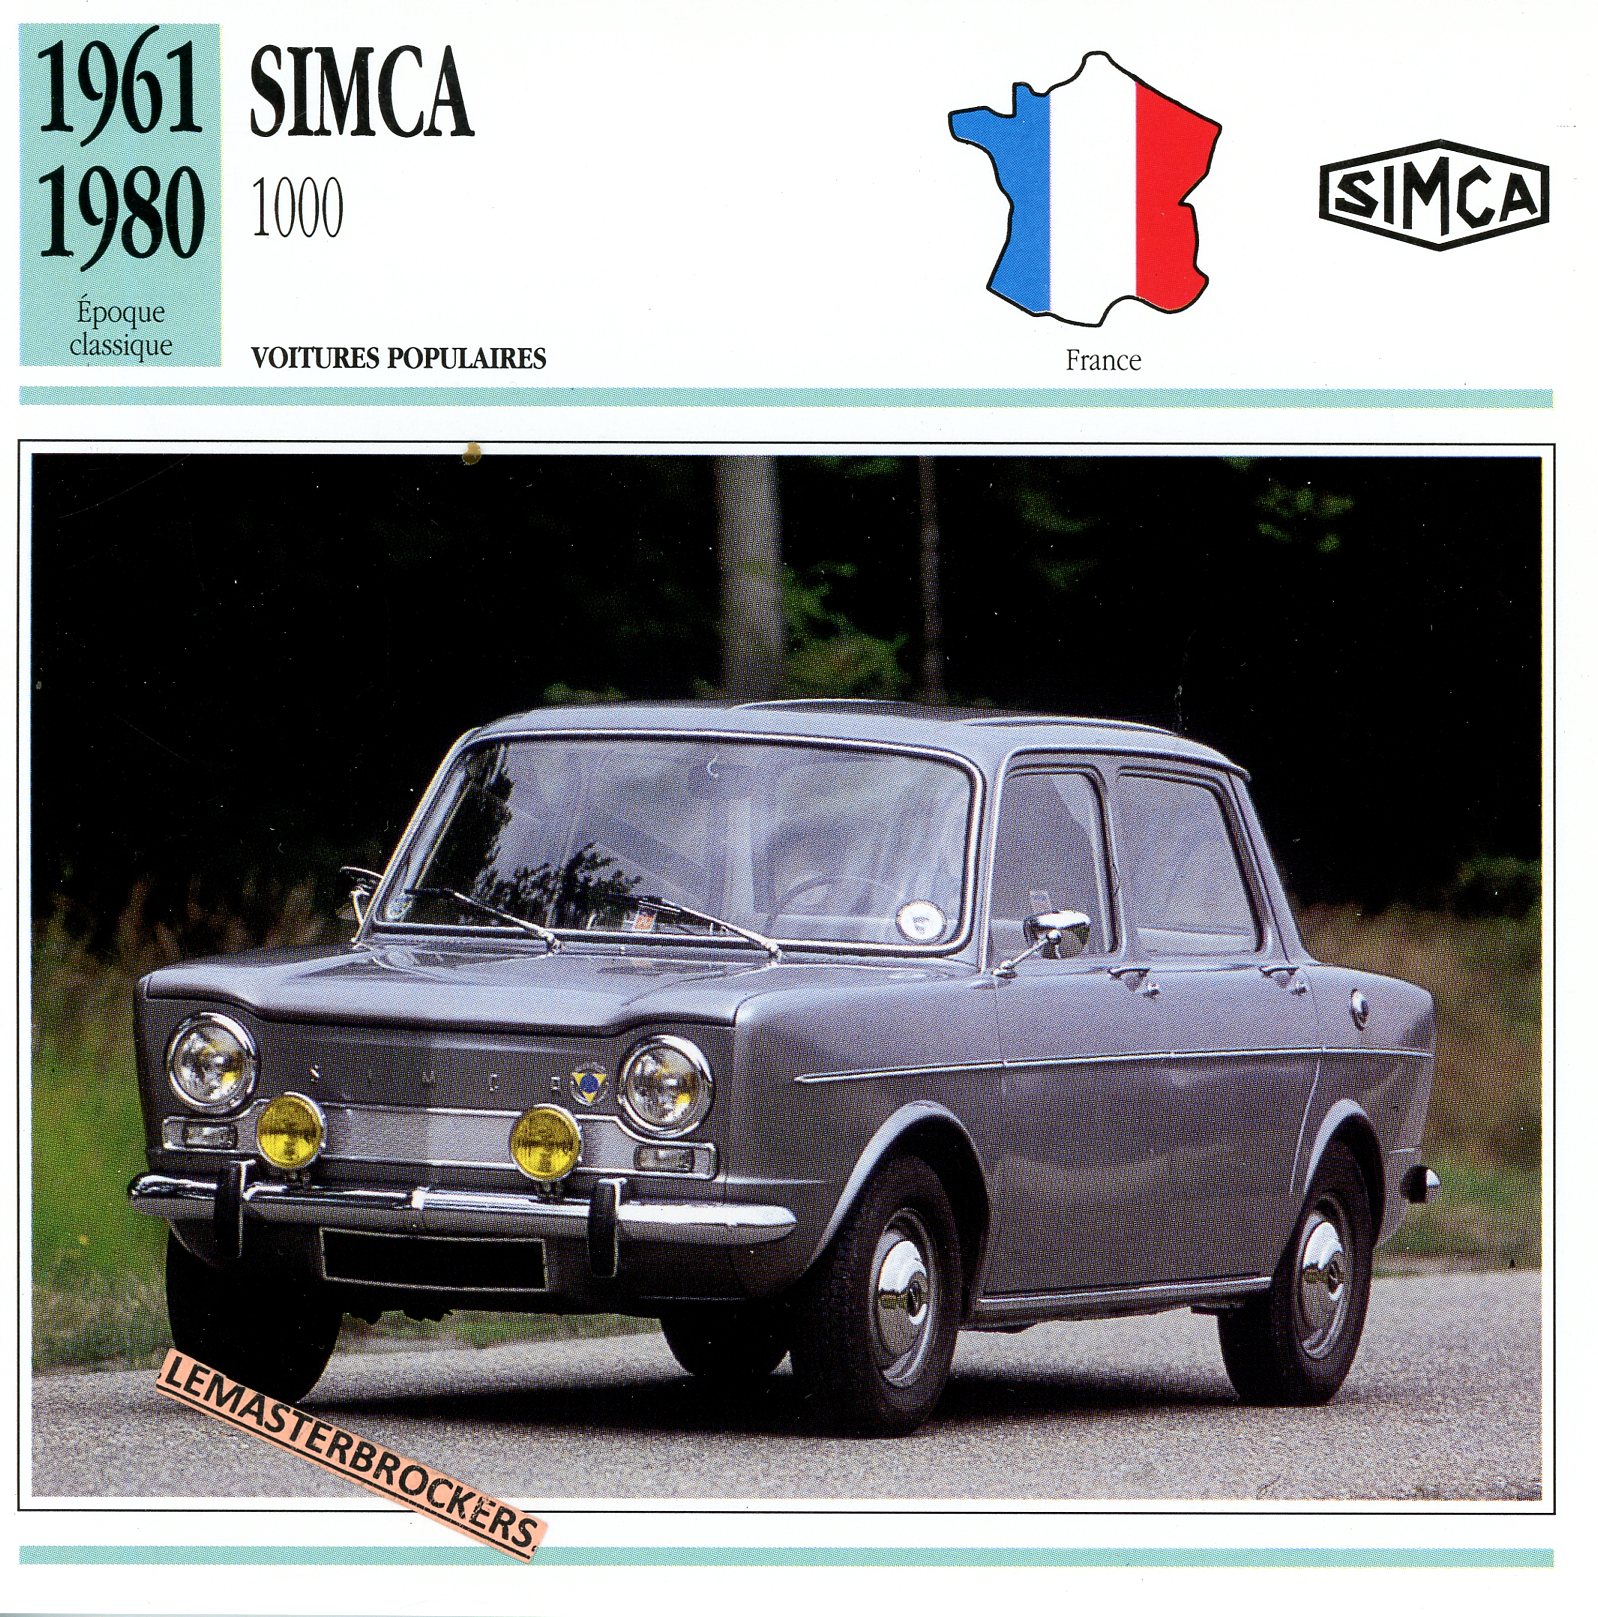 SIMCA-1000-1961-1980-FICHE-AUTO-LEMASTERBROCKERS-ATLAS-ÉDITION